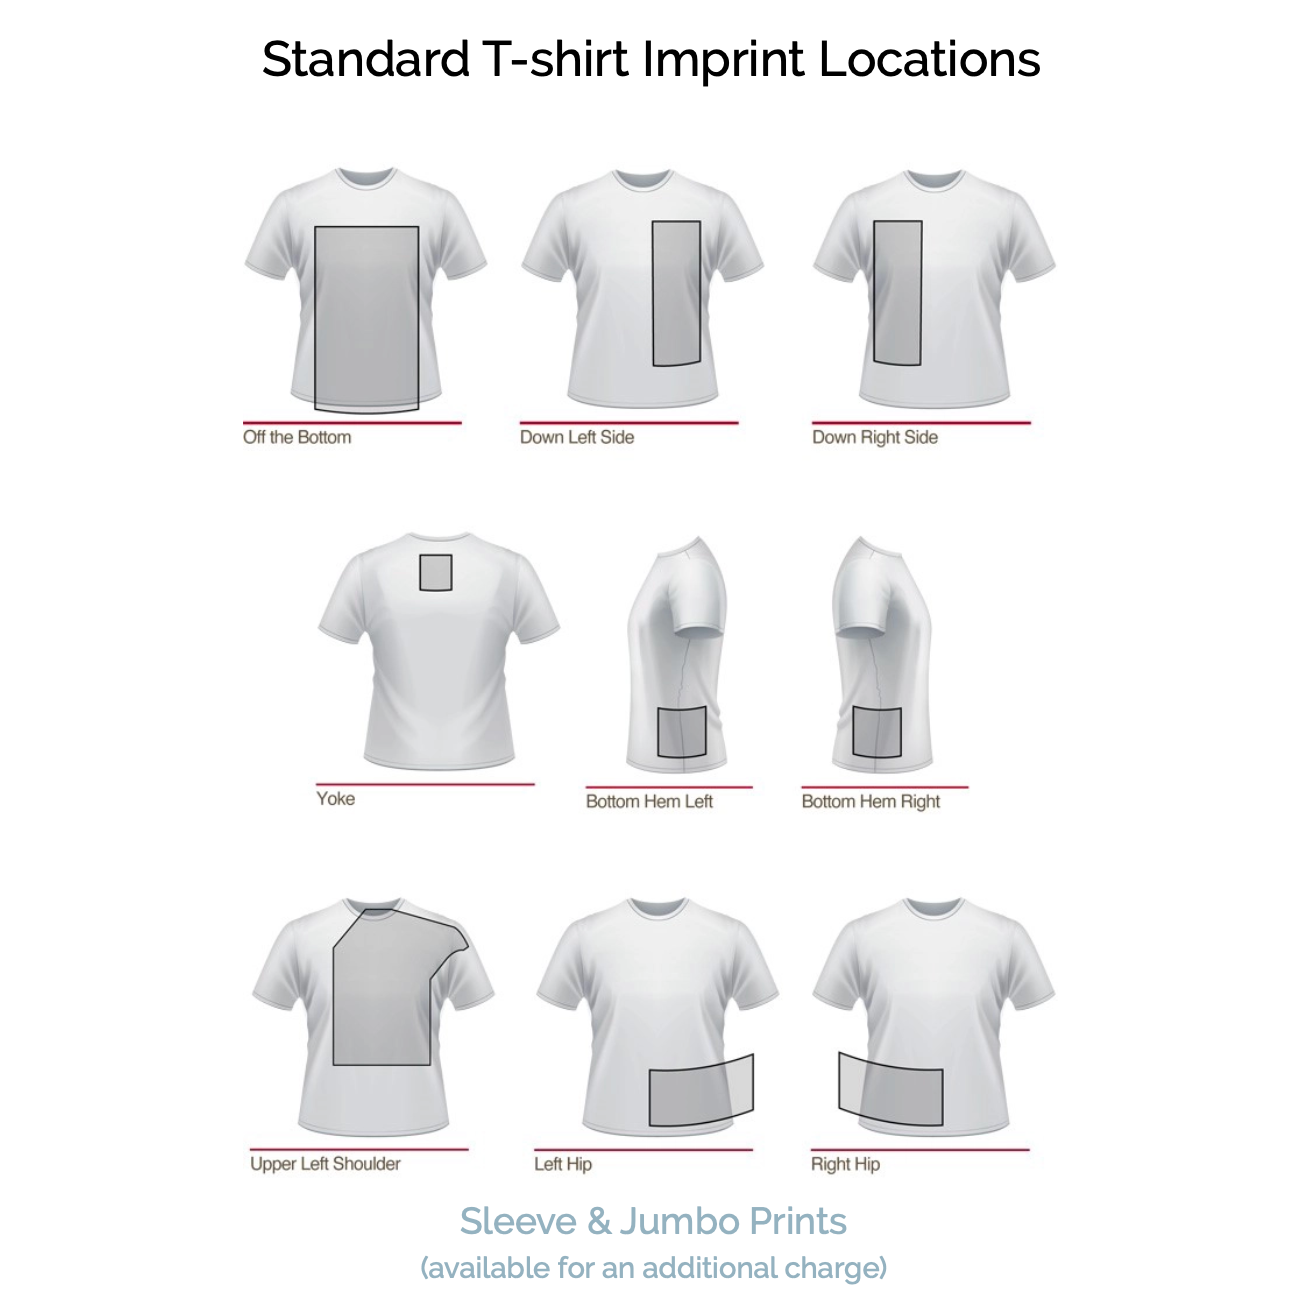 Kastlfel® Men's Recycledsoft™ Short-Sleeve T-Shirt